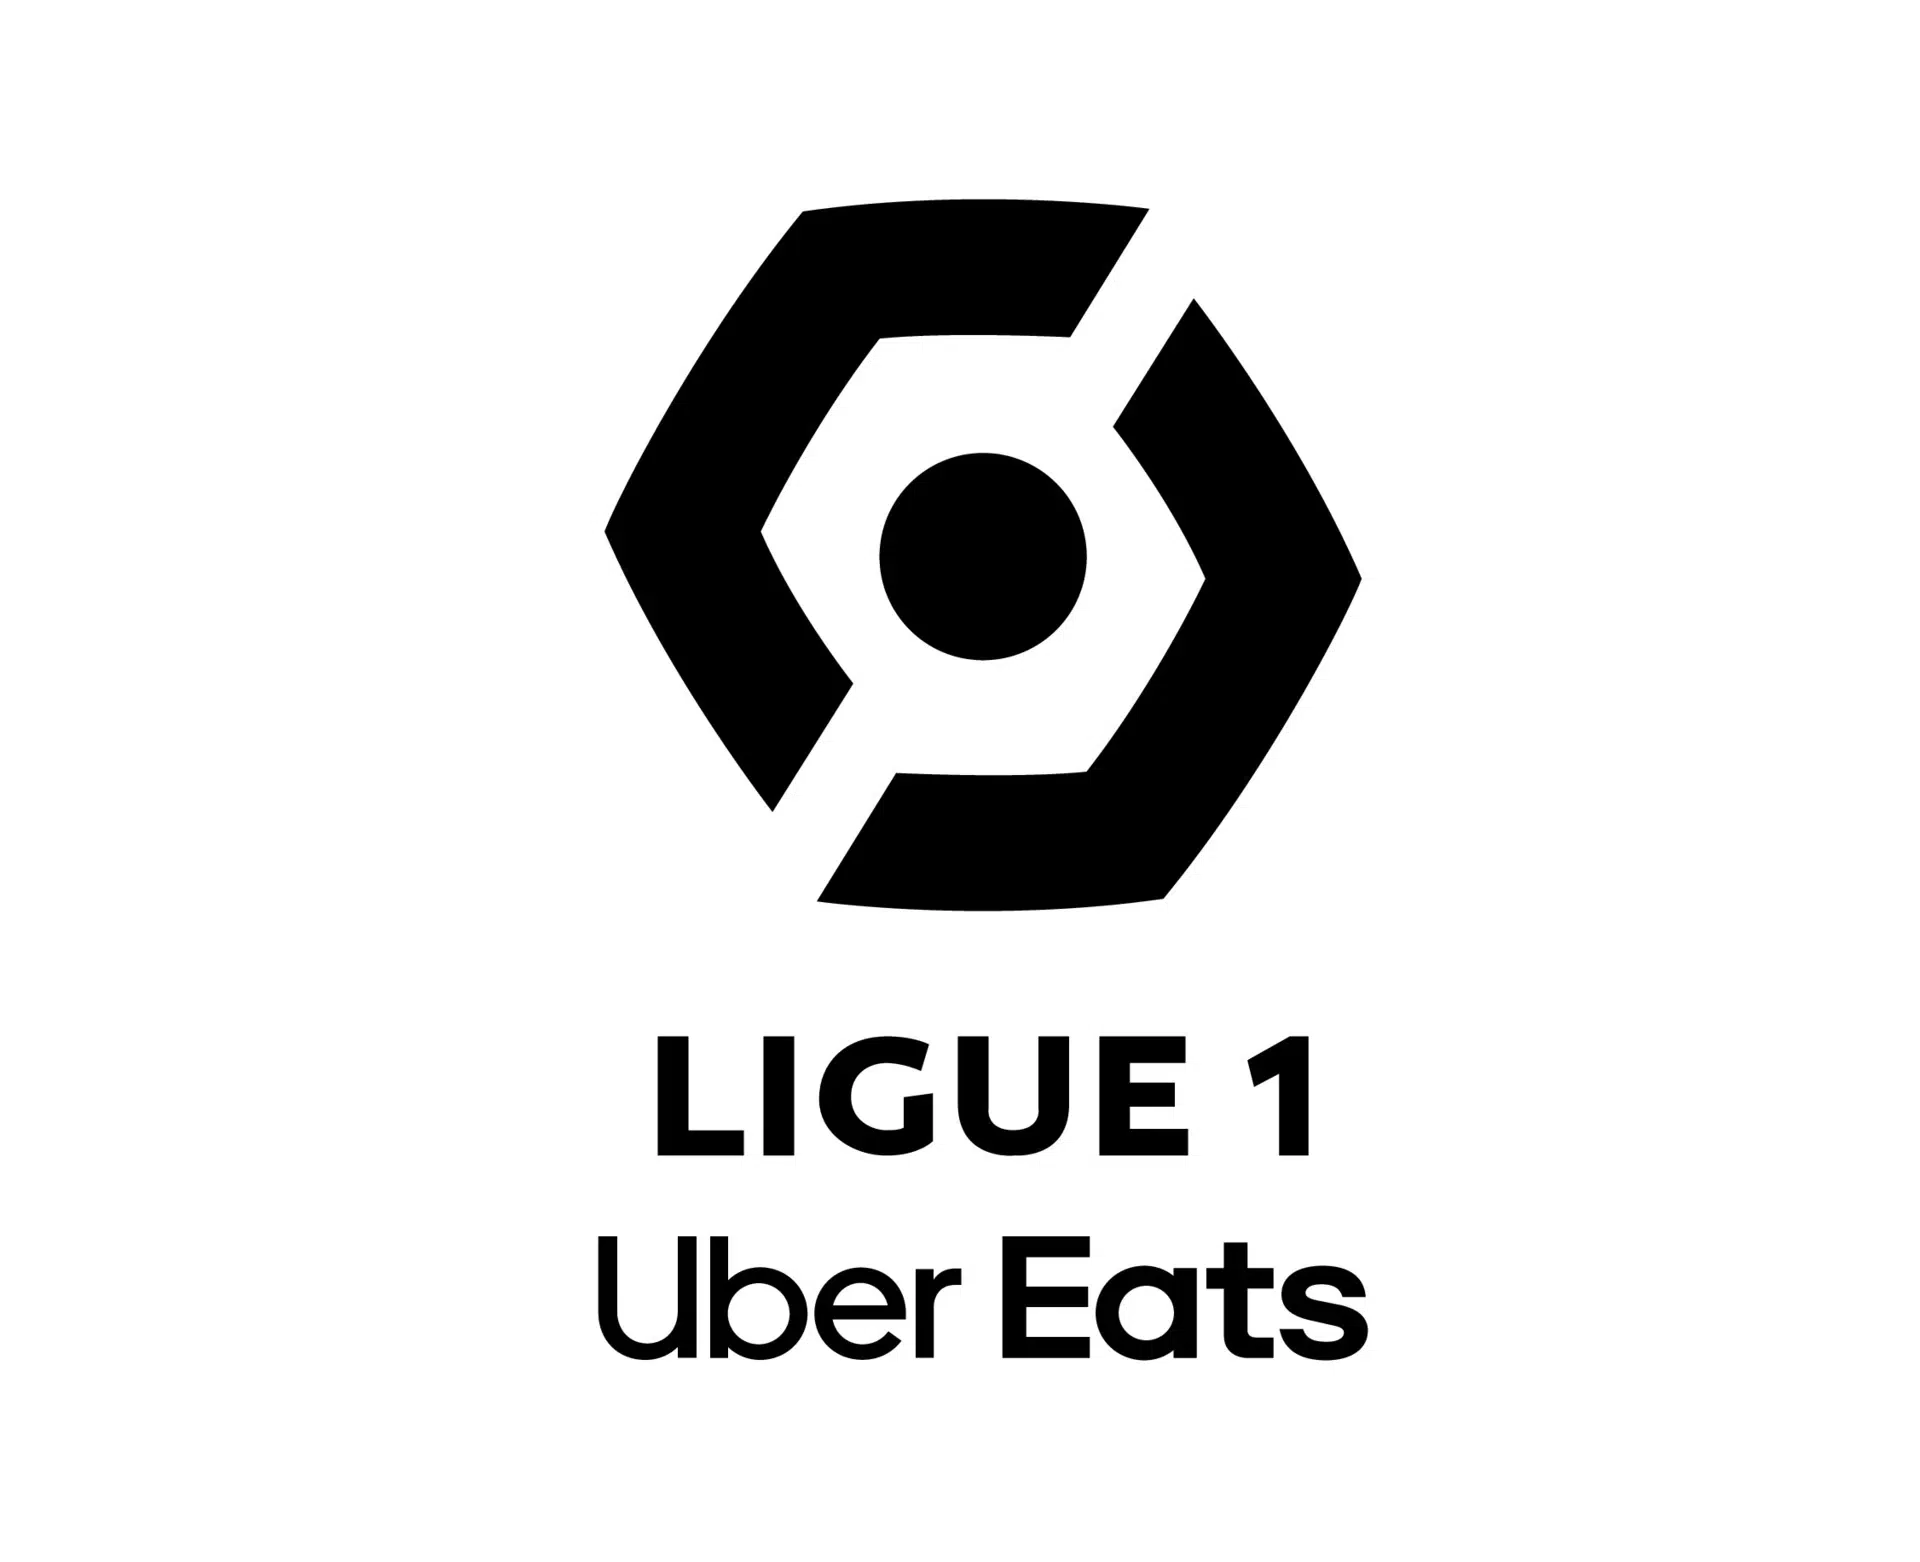 vecteezy ligue 1 uber eats logo black symbol abstract design vector 25409580